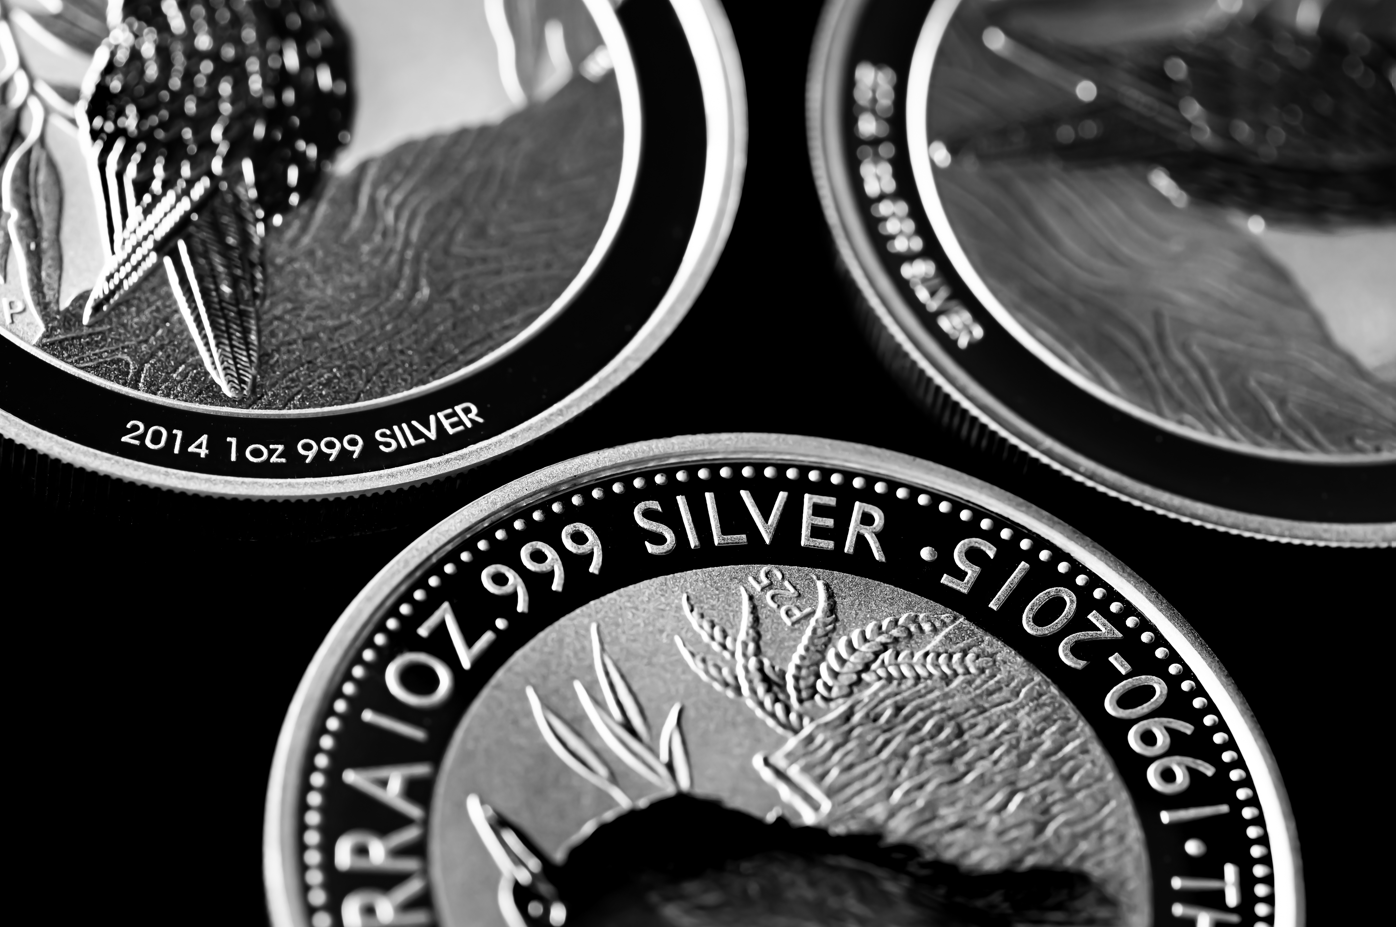 Ons gümüş fiyat analizi : ABD dolar endeksinin artmış olması ons gümüş fiyatını tökezletti